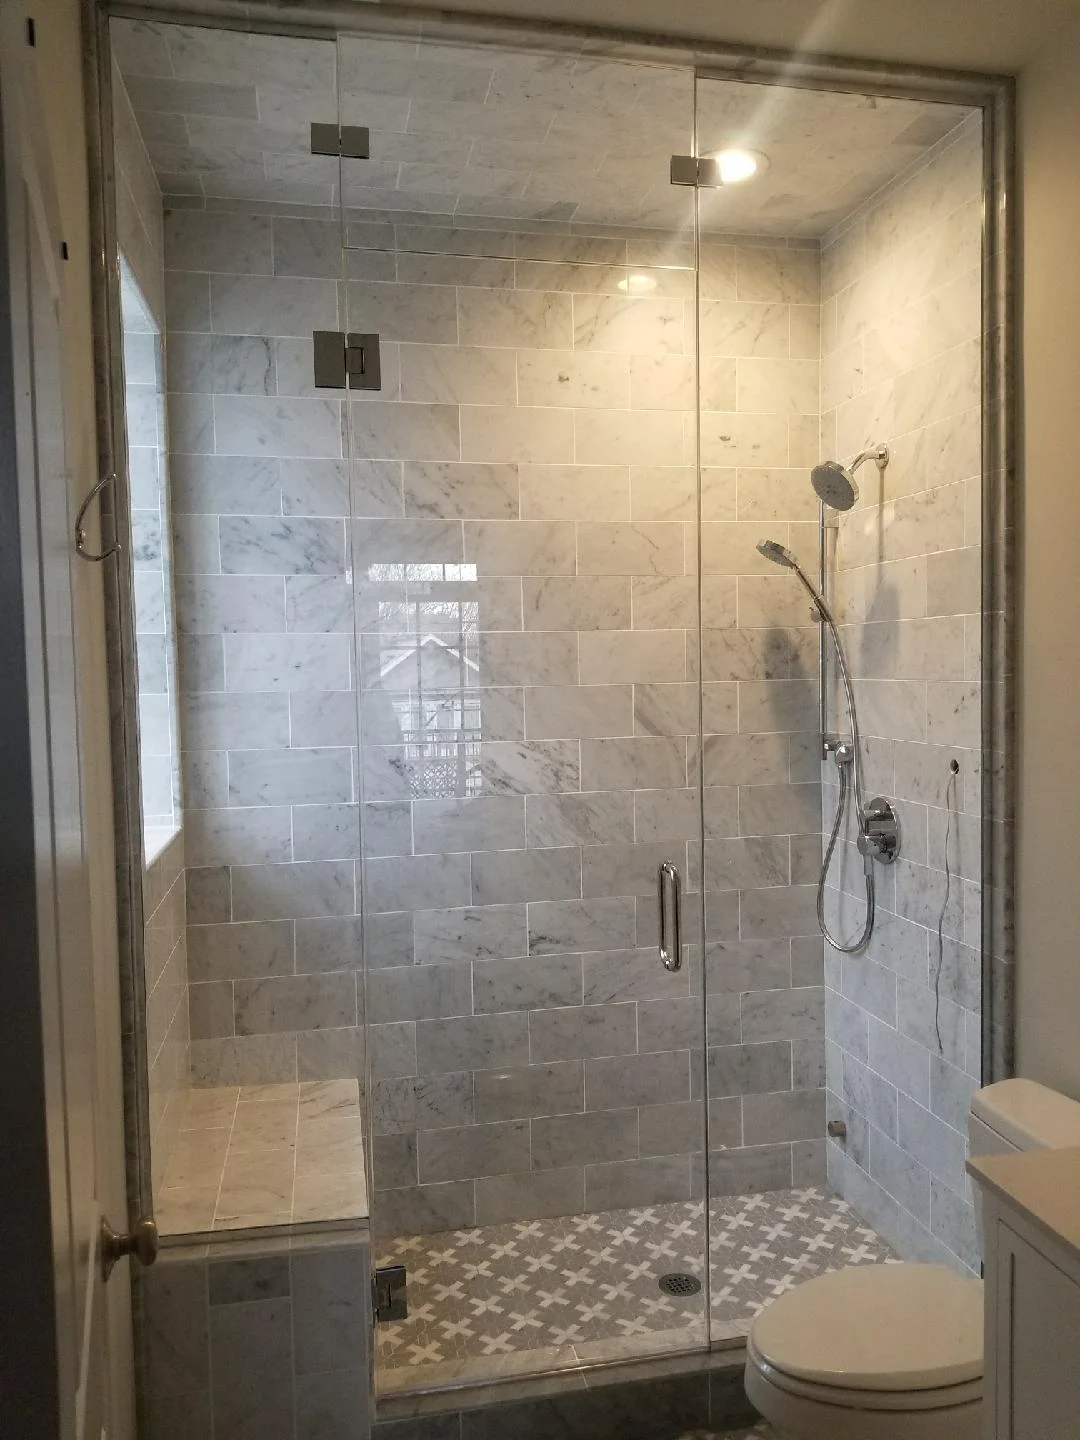 shower doors installed in modern bathroom